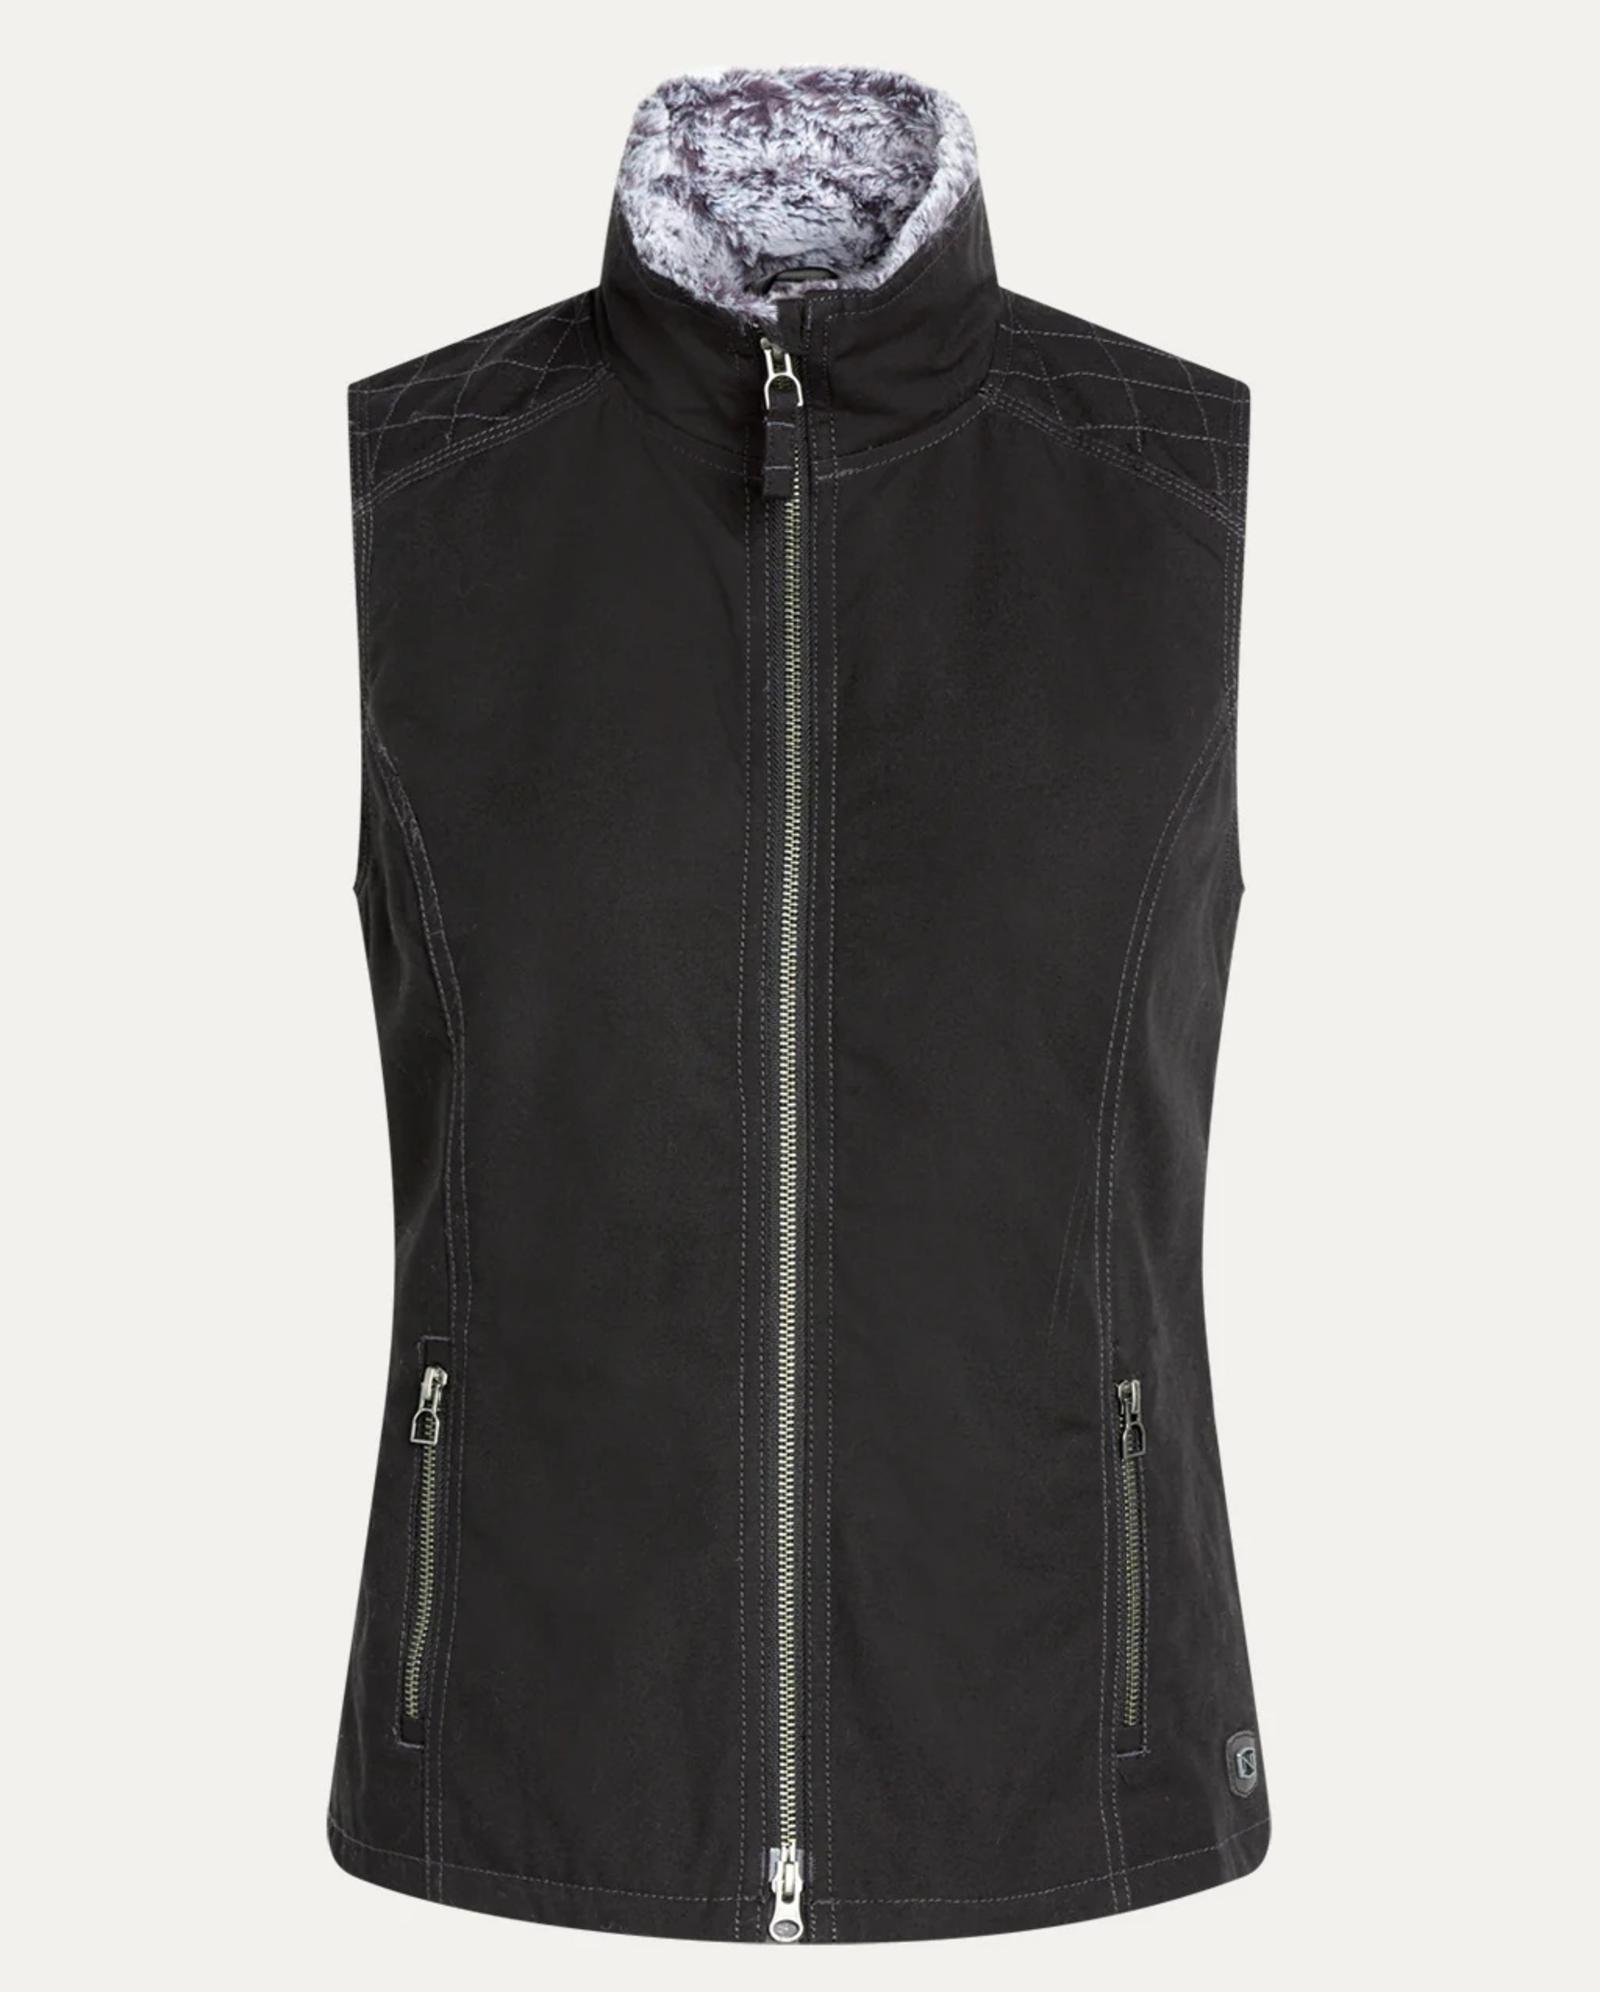 Noble Outfitters Women's Canvas Vest black Front View